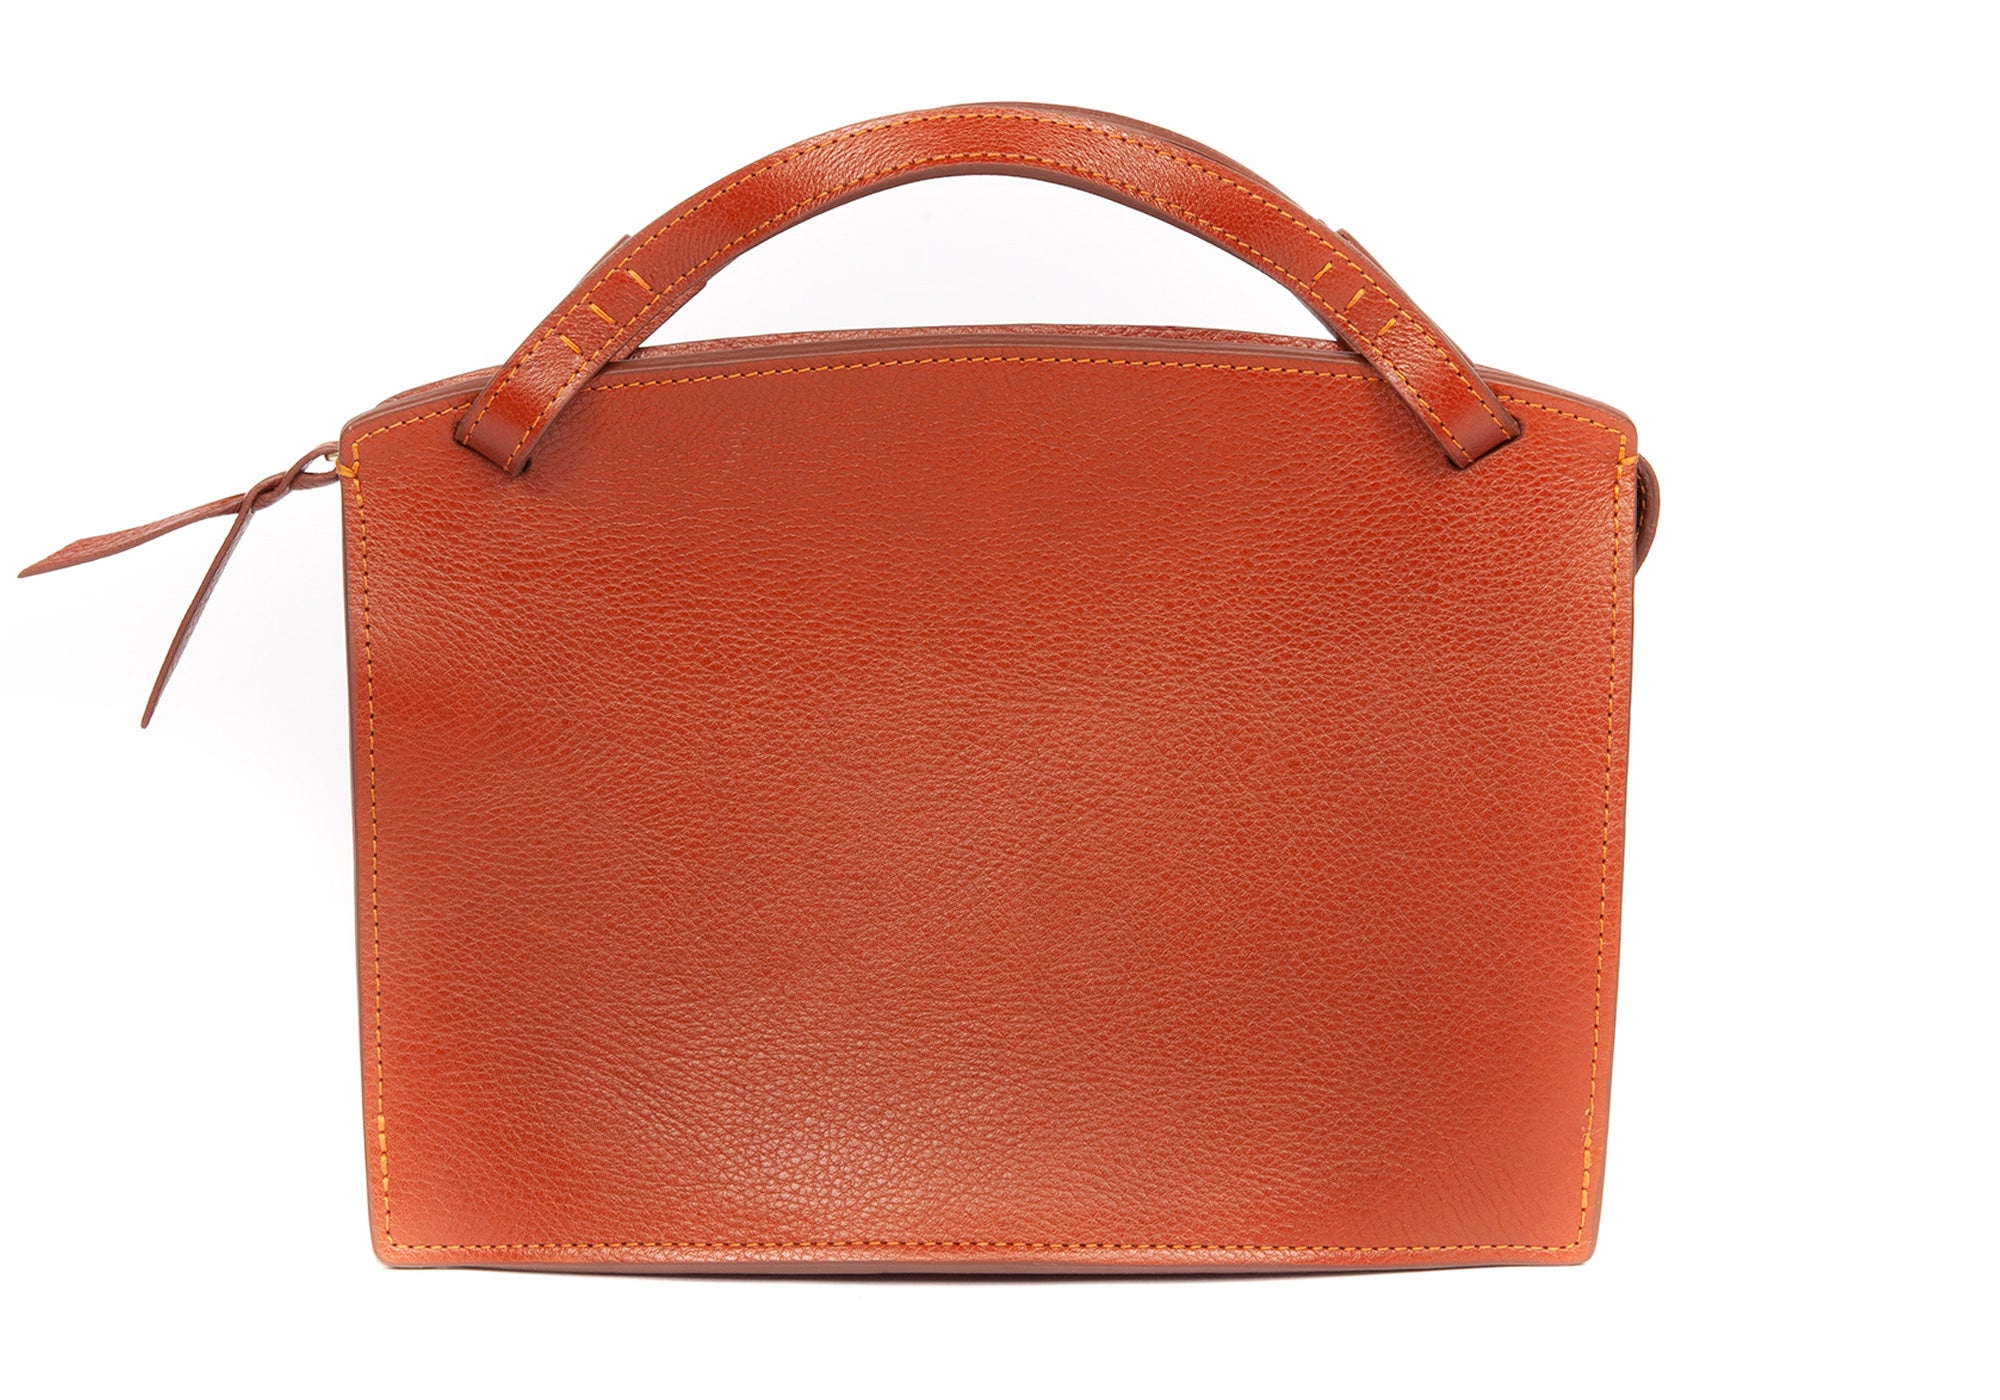 The Sol Handbag Saddle Tan